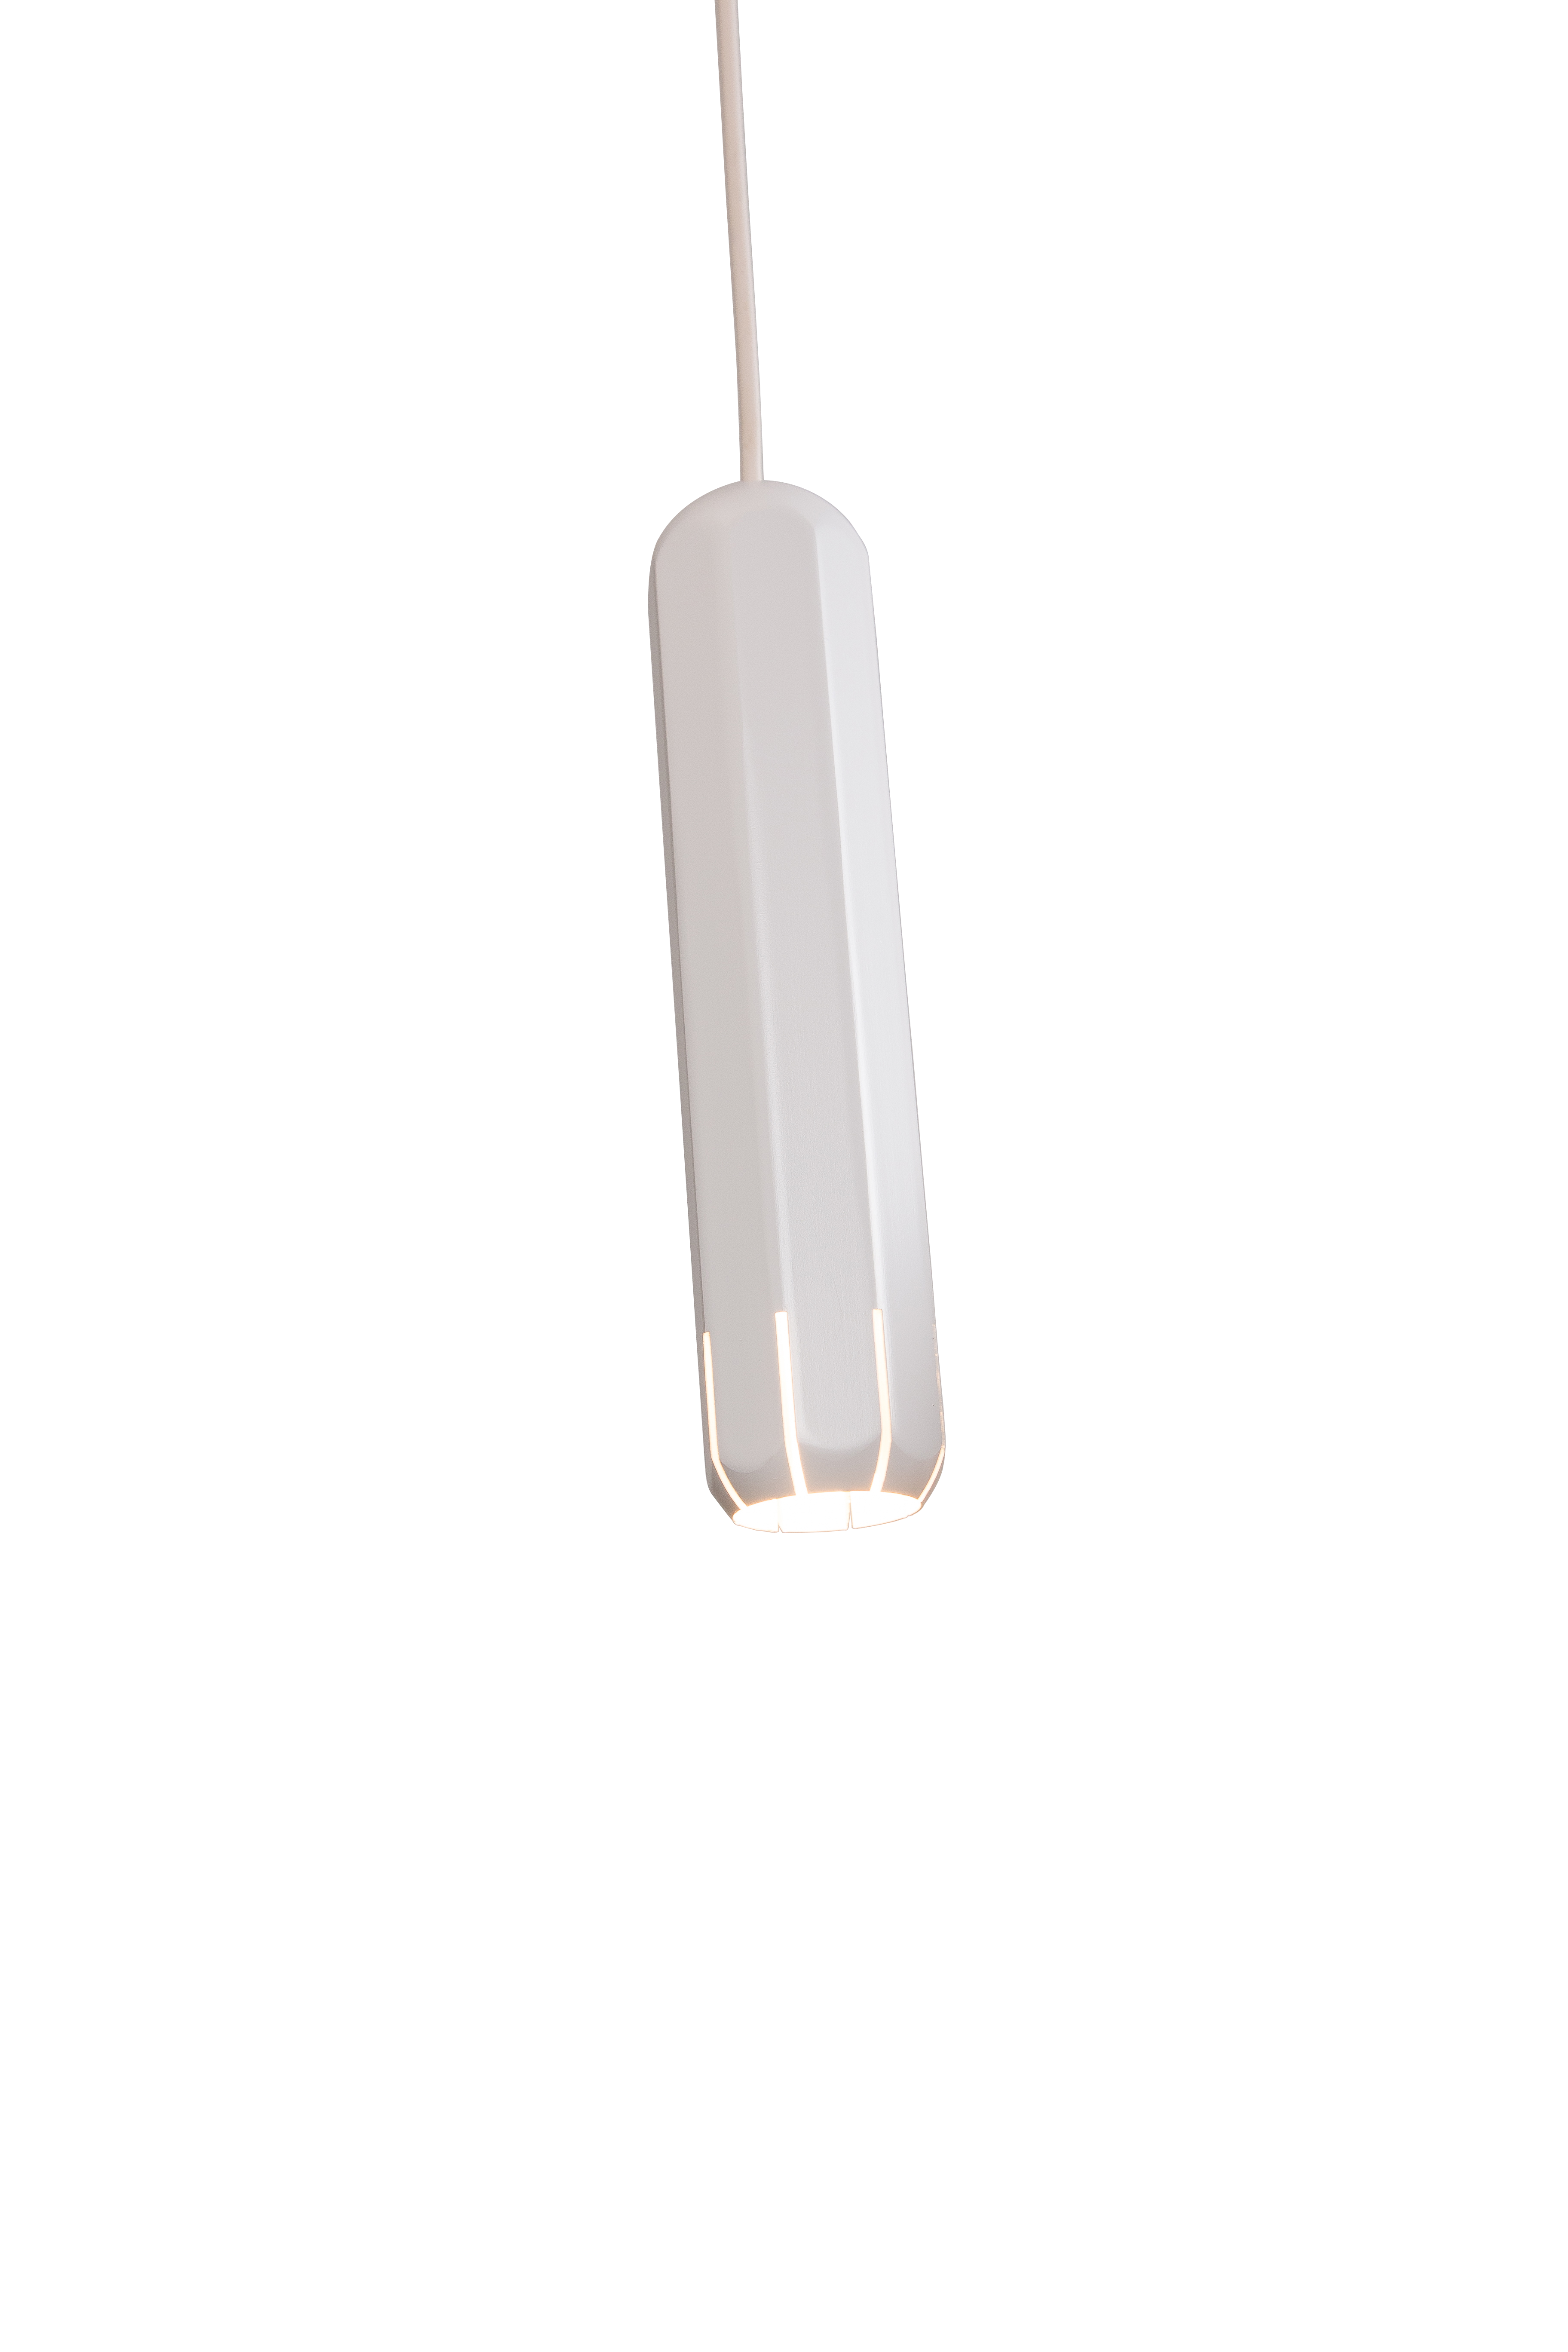 Innermost BRIXTON SPOT Pendant light LED